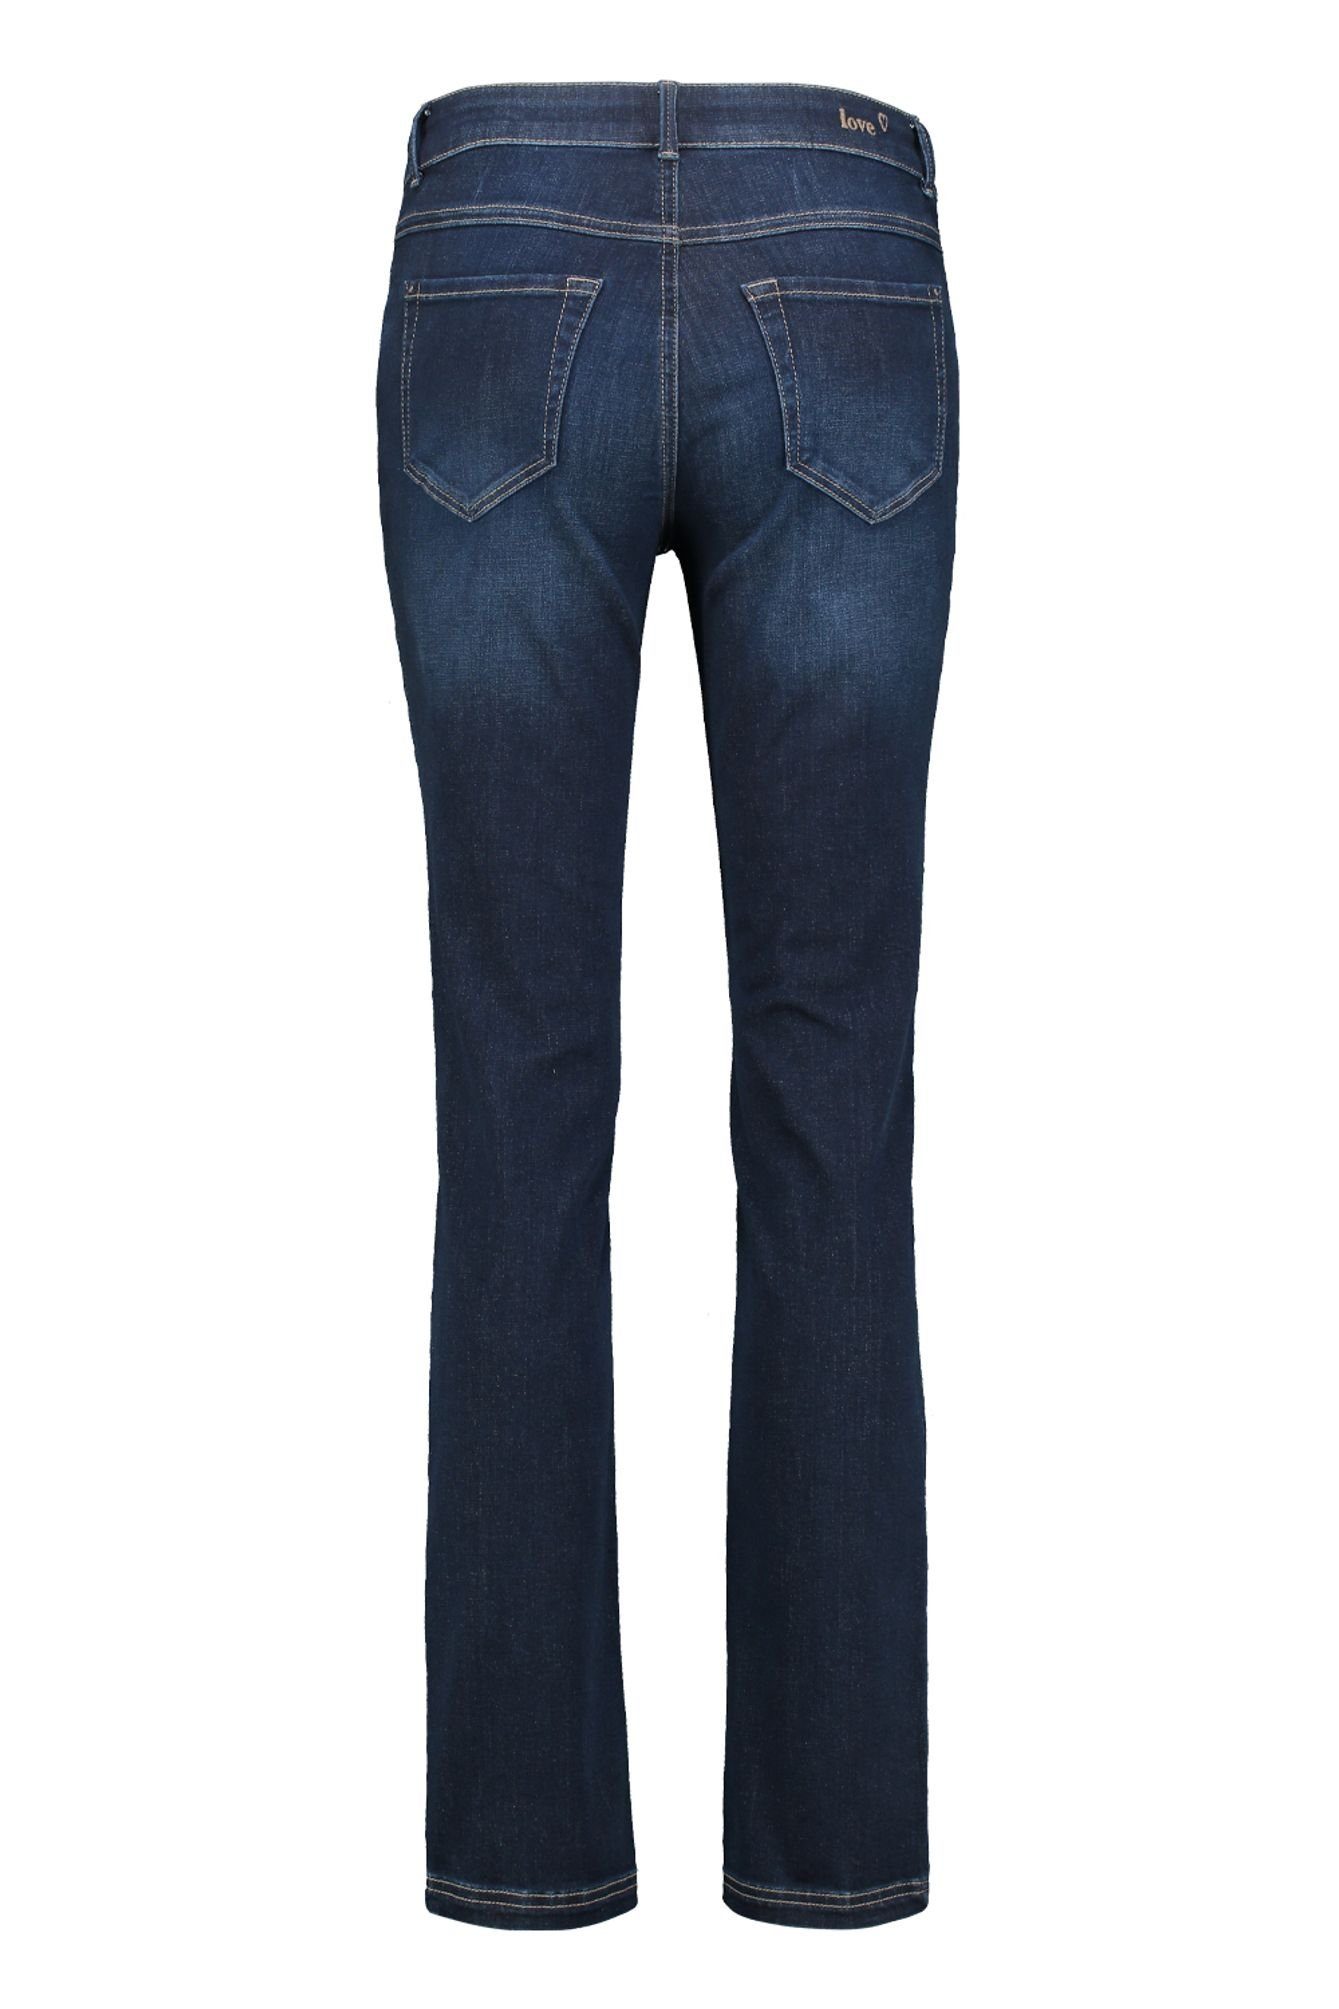 Vicky743 5-Pocket-Jeans (7169) Atelier blau GARDEUR